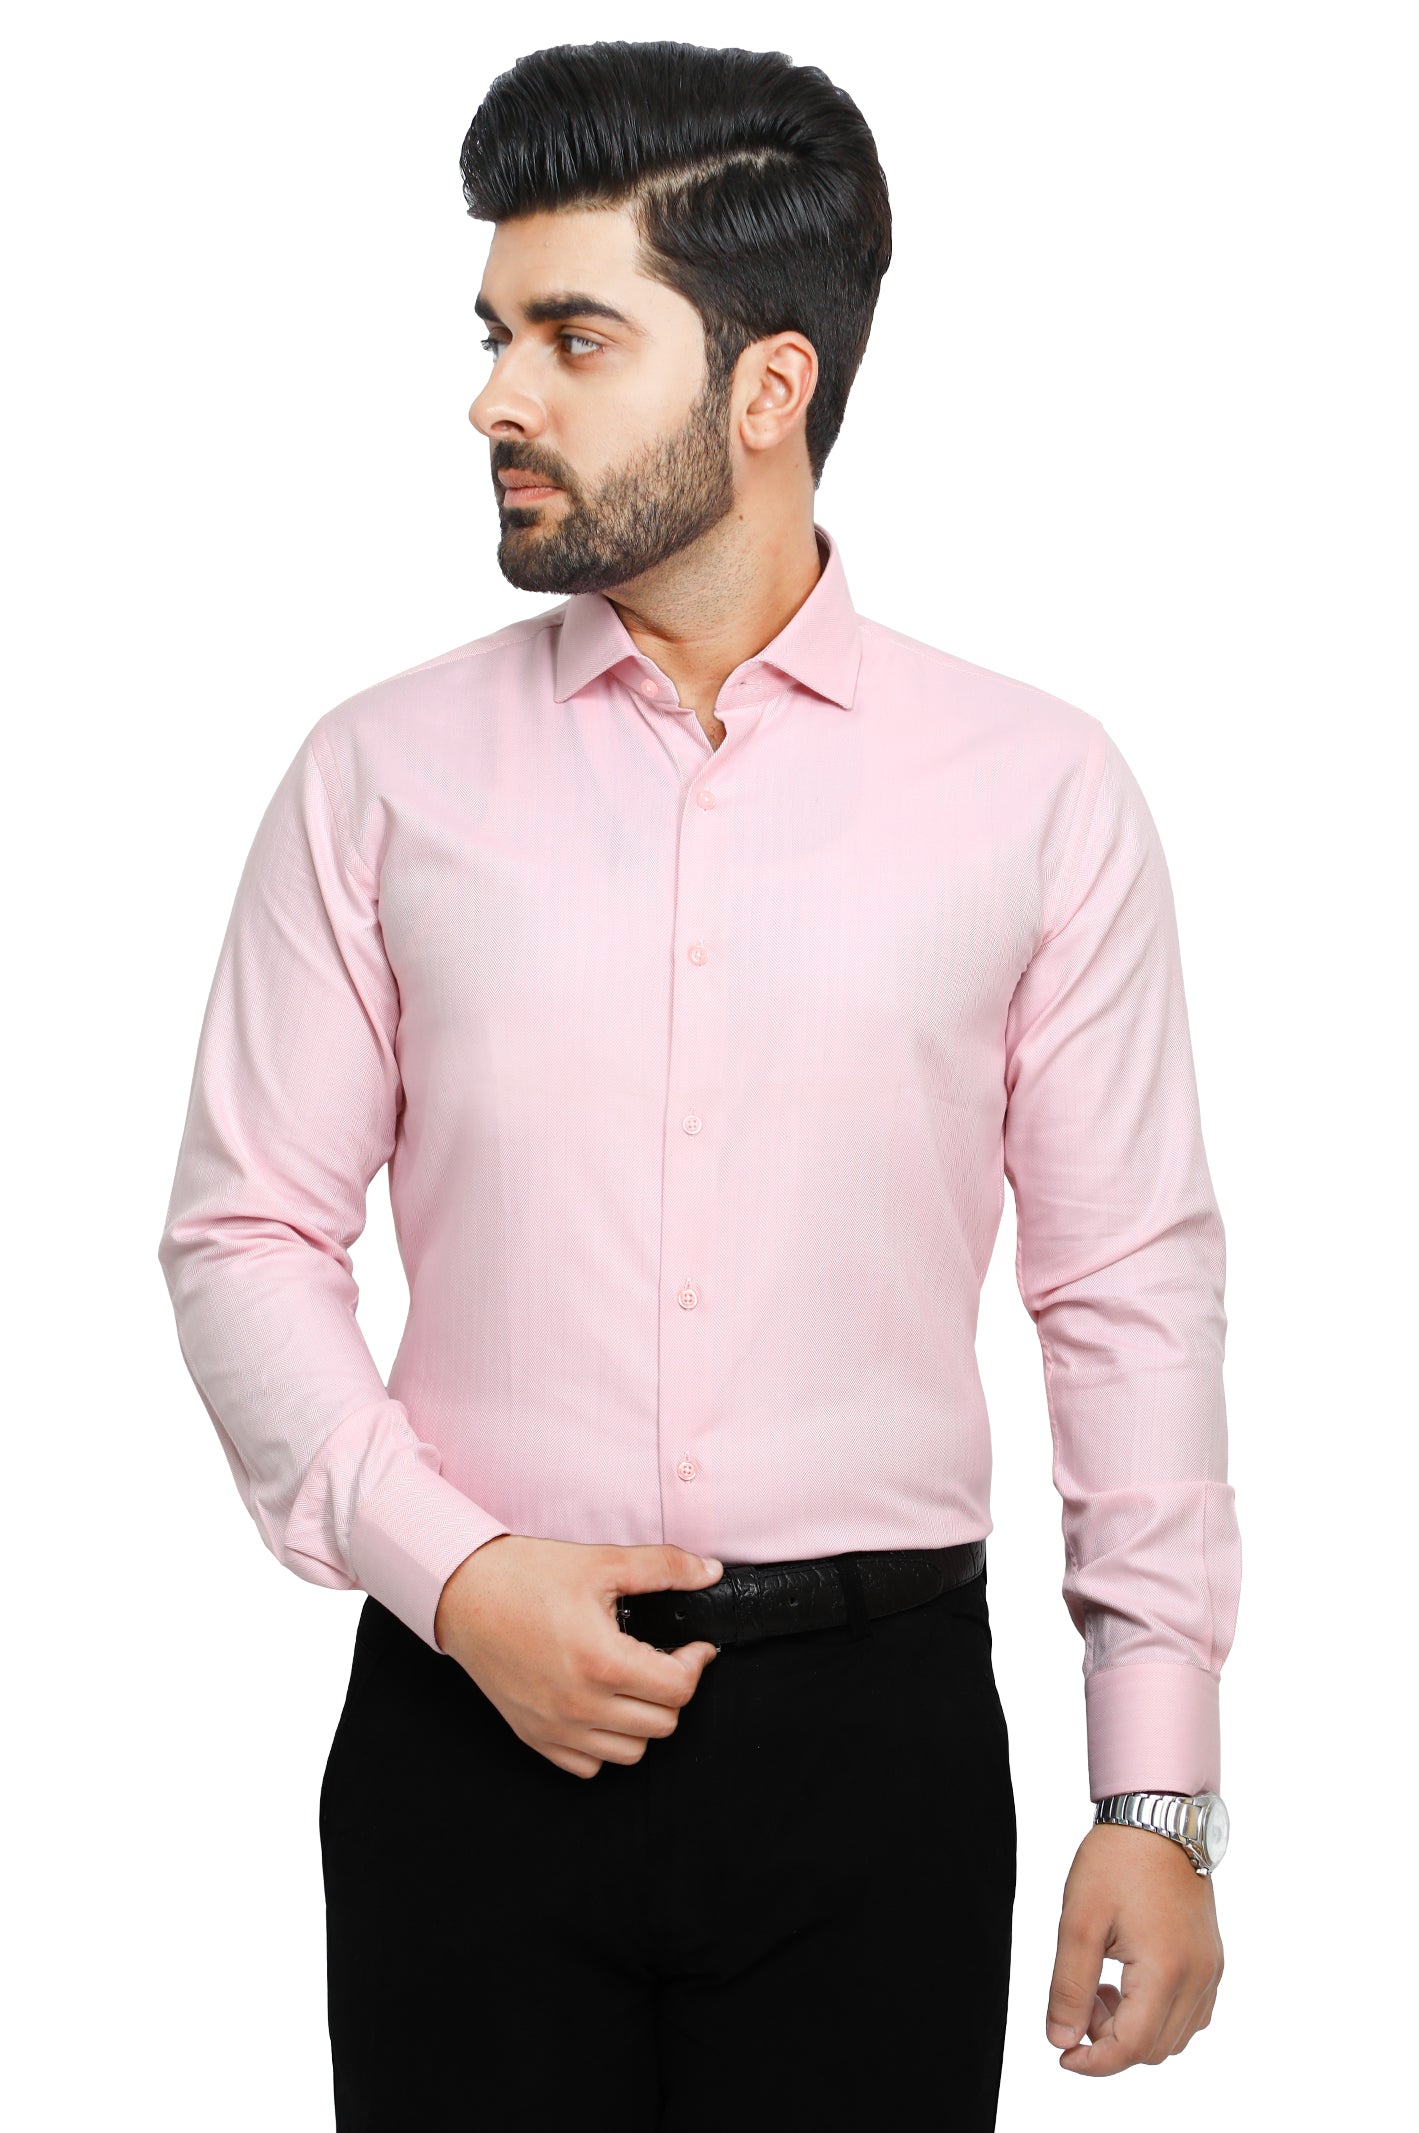 Formal Man Shirt in Pink SKU: AB19371-PINK - Diners